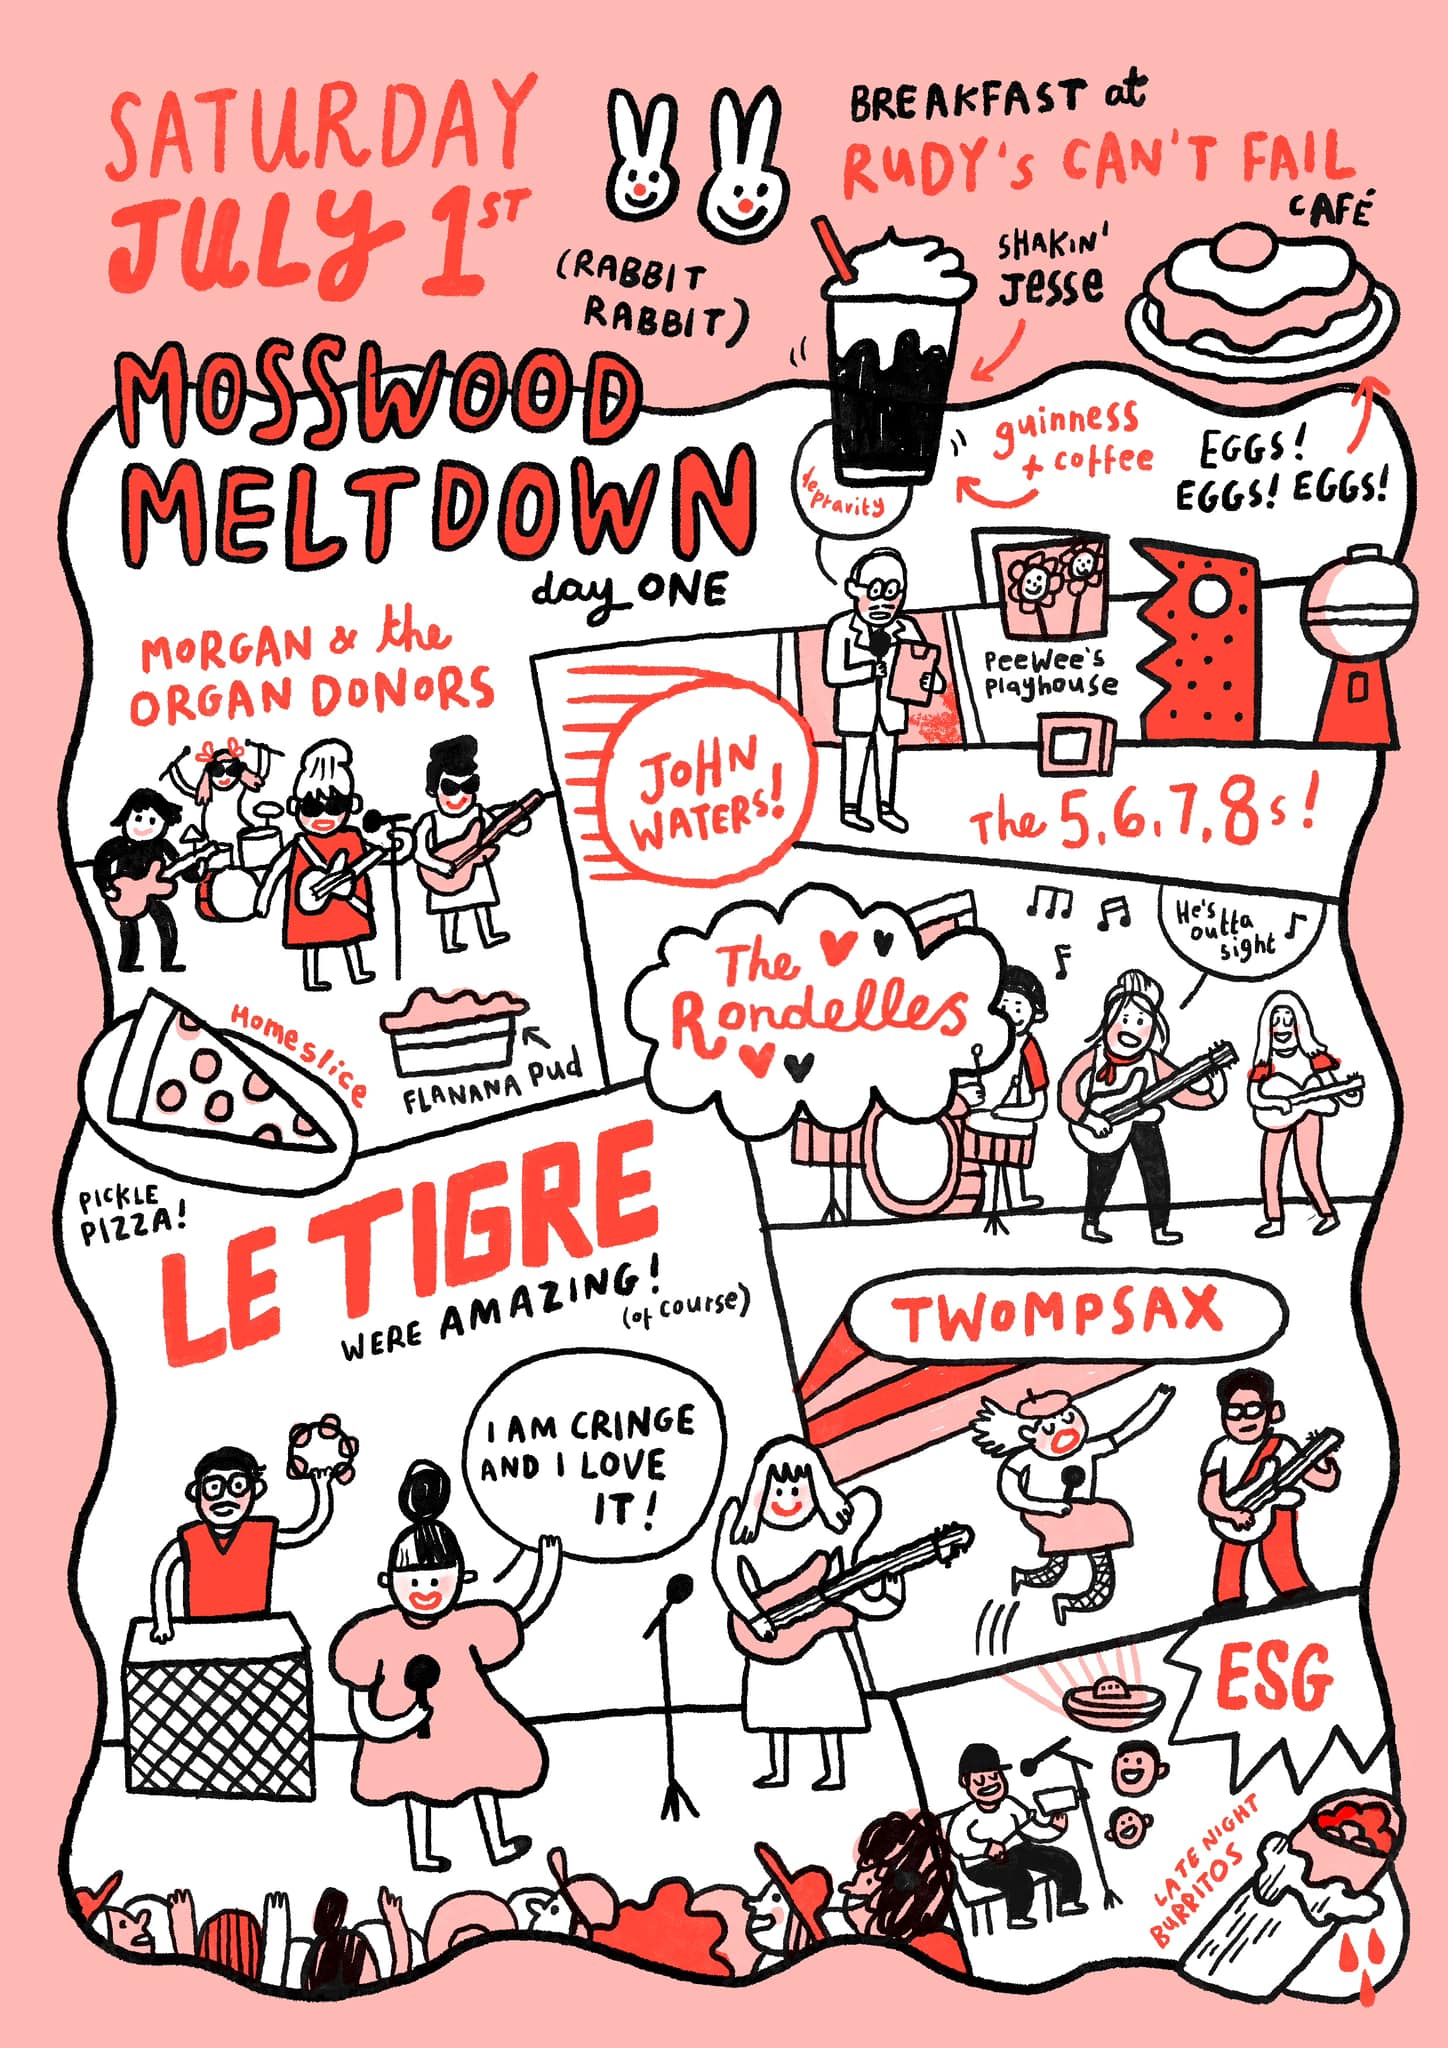 Mosswood Meltdown diaries